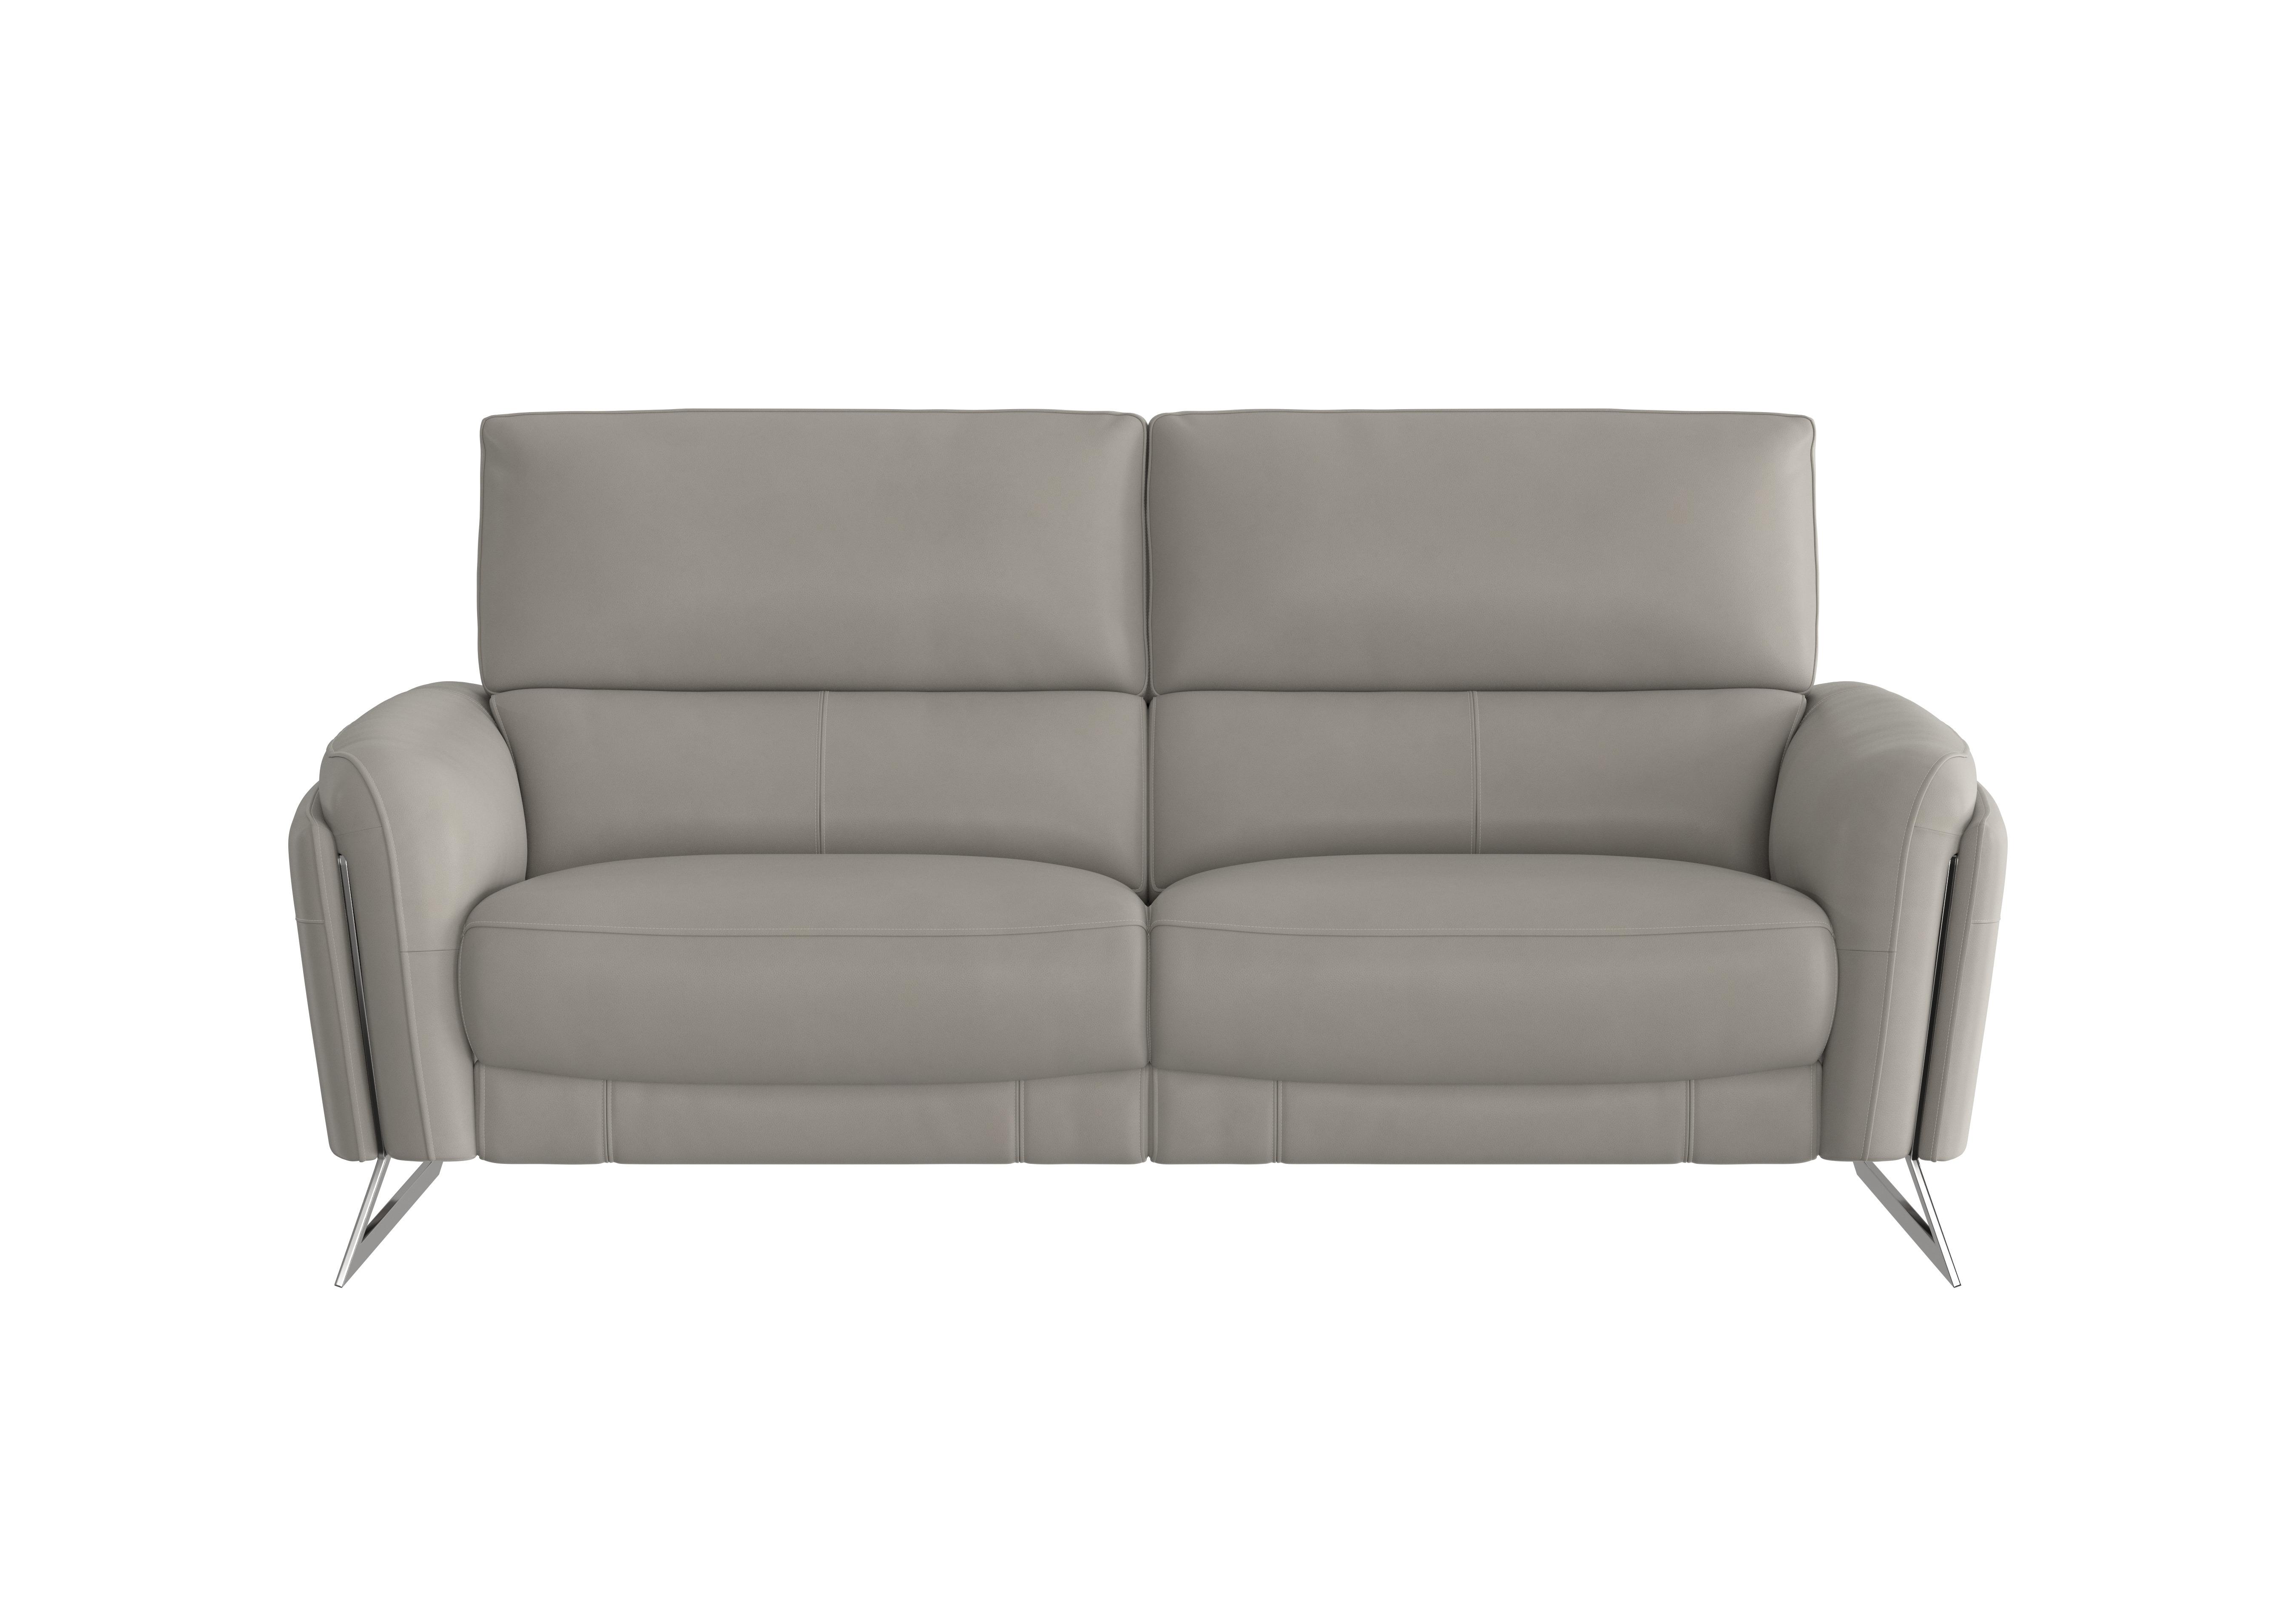 Amarilla 3 Seater Leather Sofa in Bv-946b Silver Grey on Furniture Village